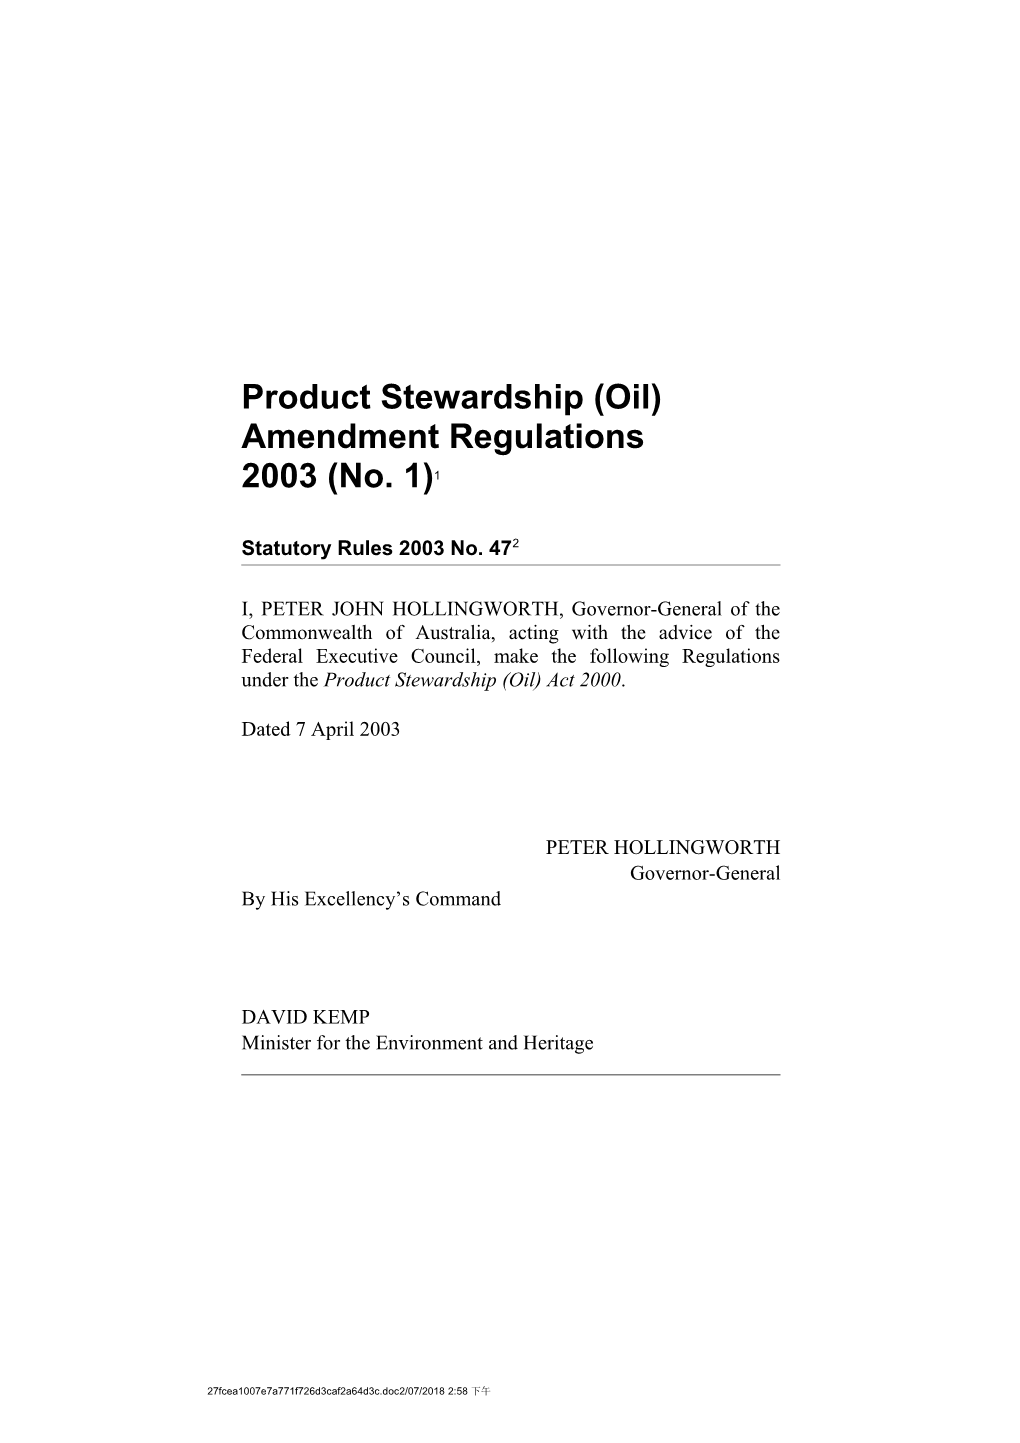 Product Stewardship (Oil) Amendment Regulations 2003(No.1) 1